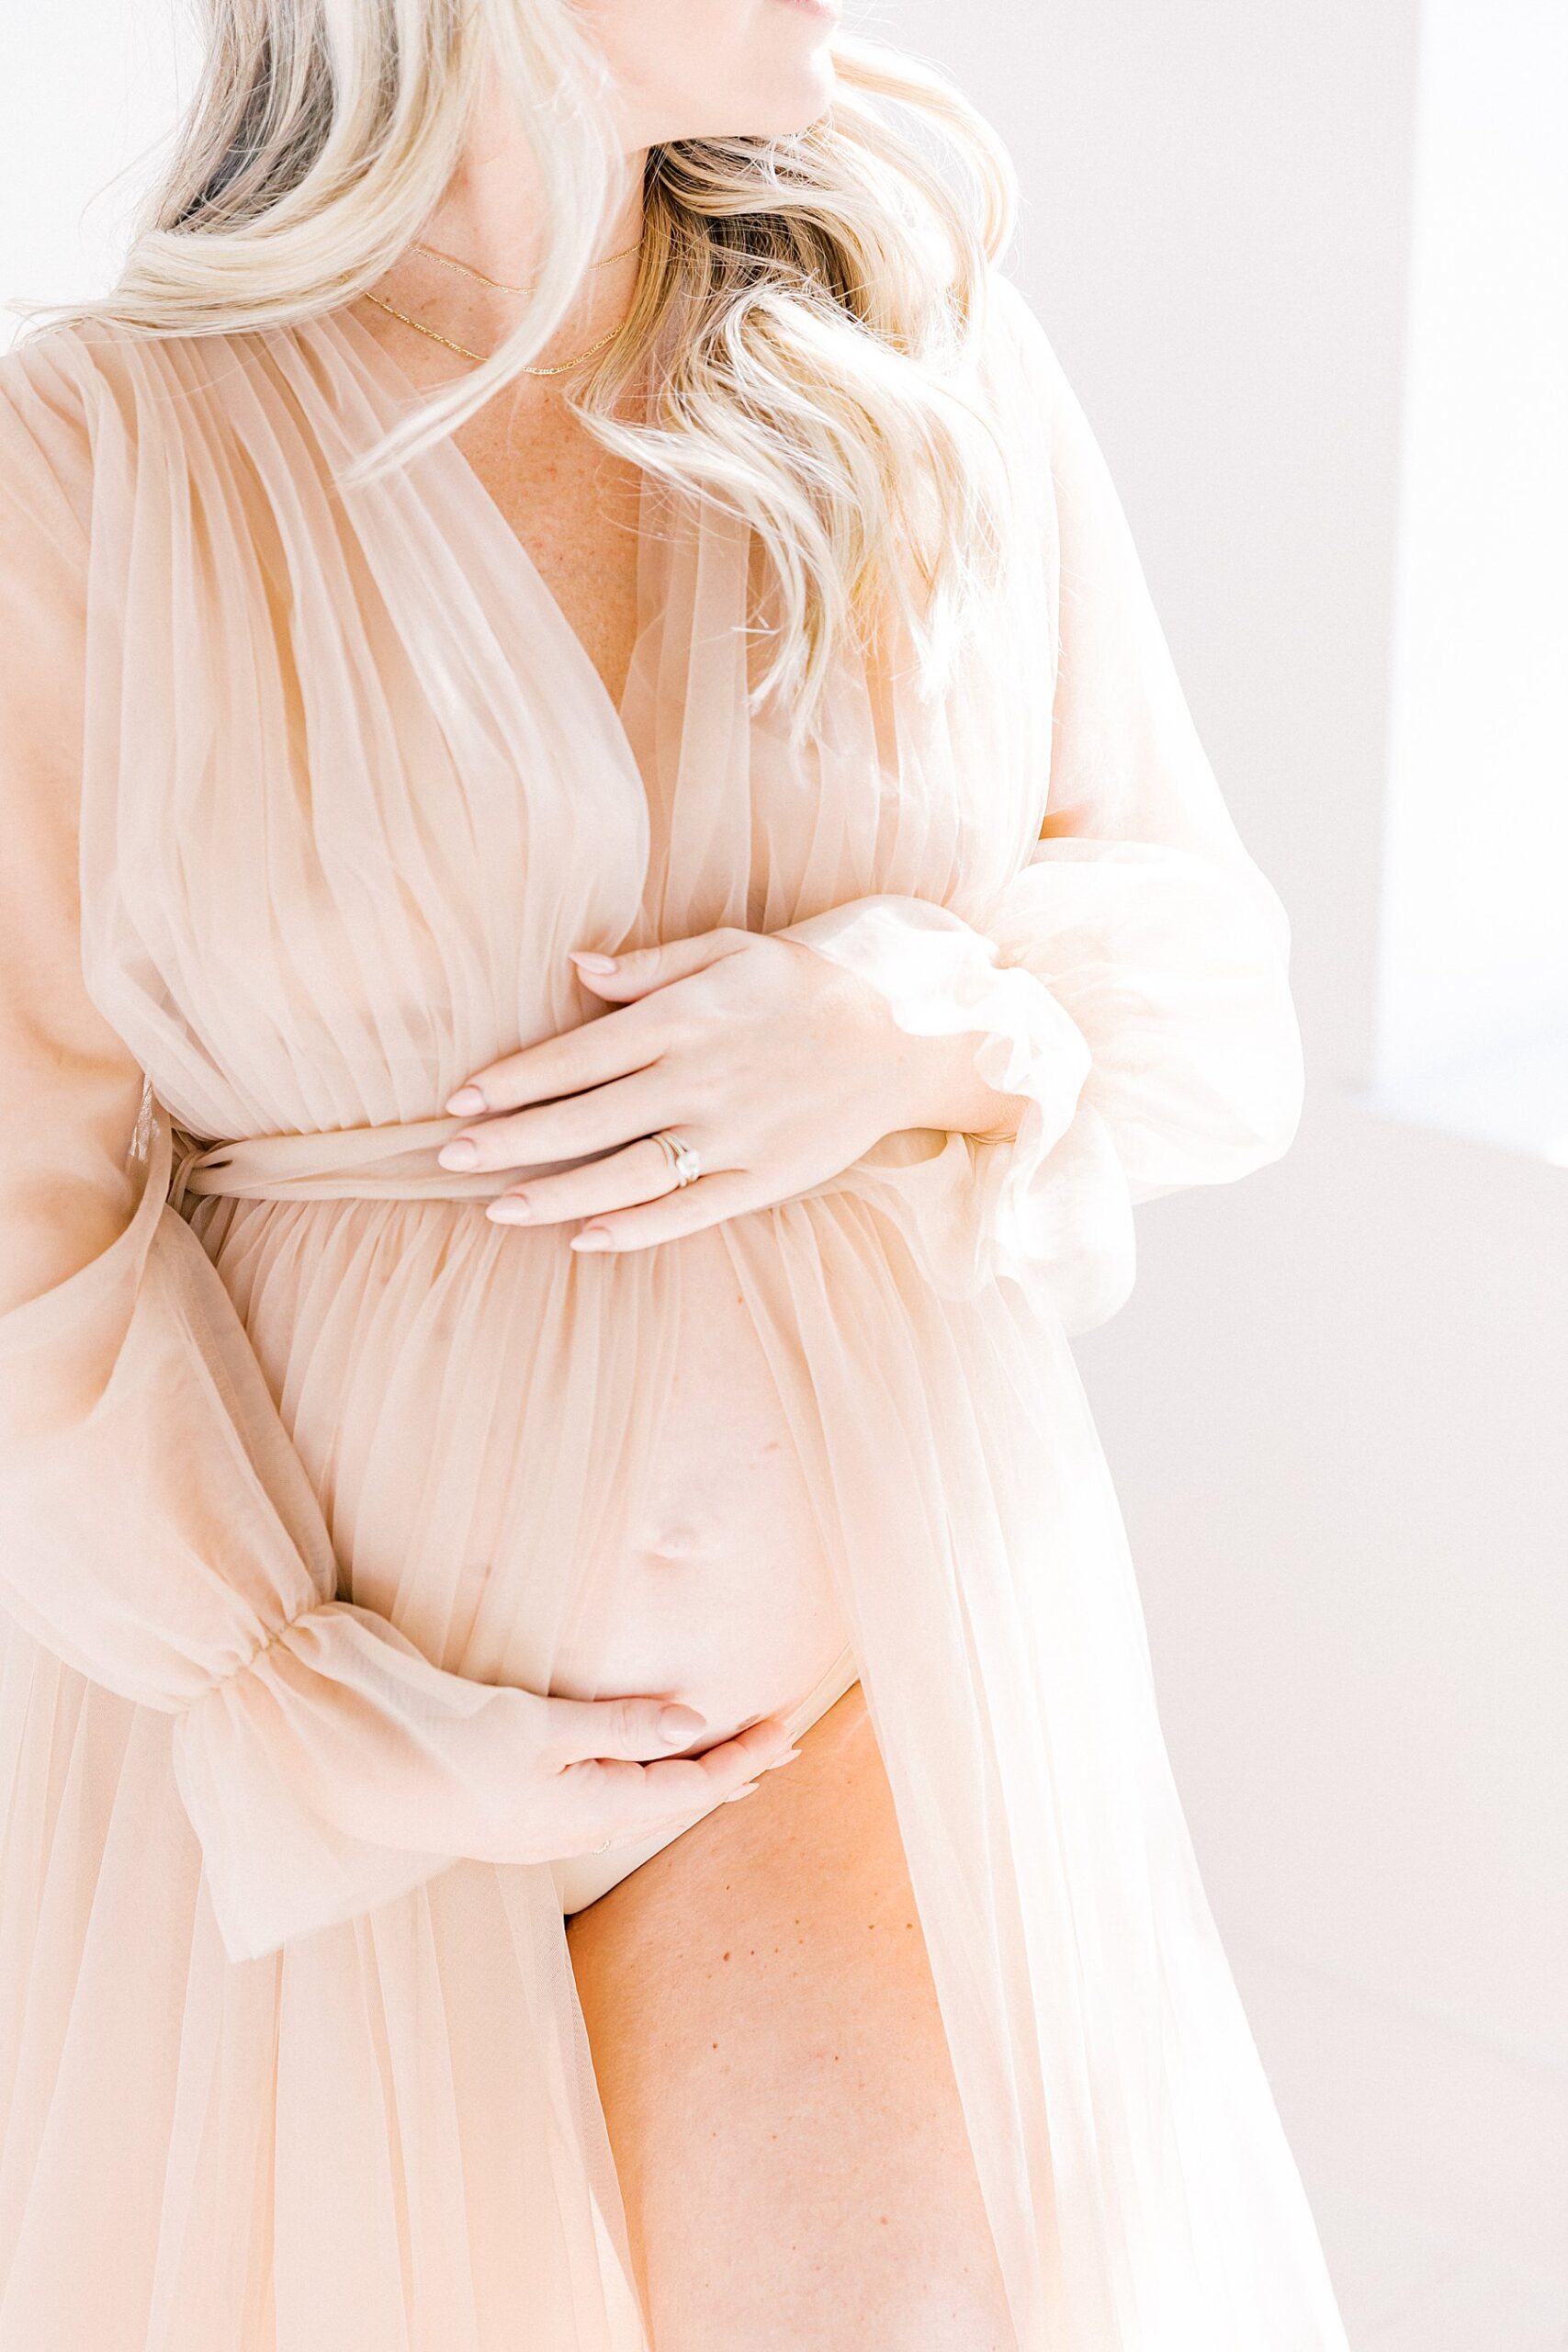 Charlotte Pregnancy Photographer Katie Petrick Photography